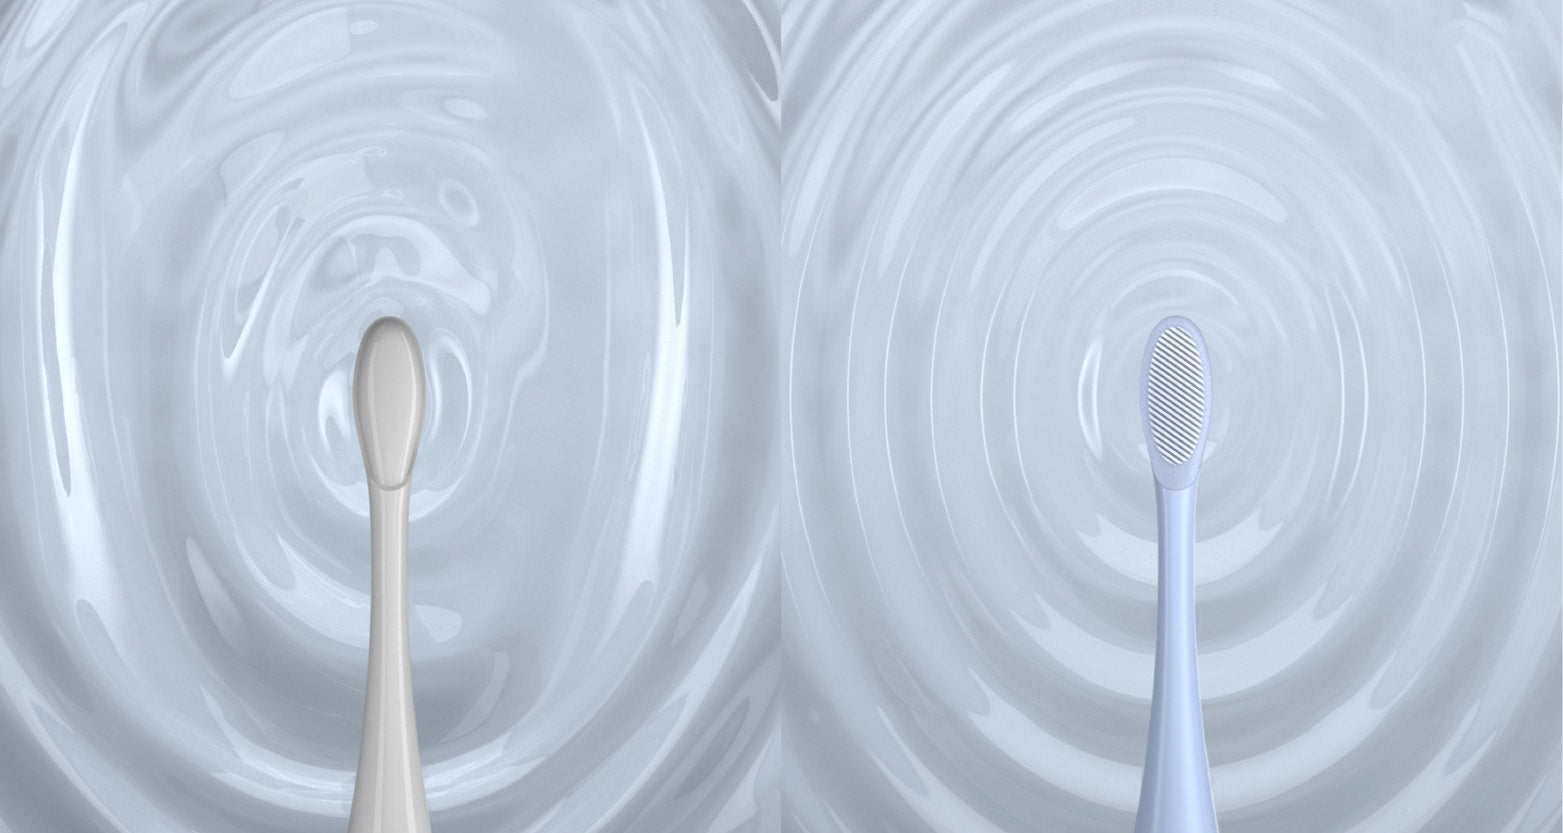 Oclean X Pro Digital Sonic Electric Toothbrush-Brosses à dents-Oclean Global Store